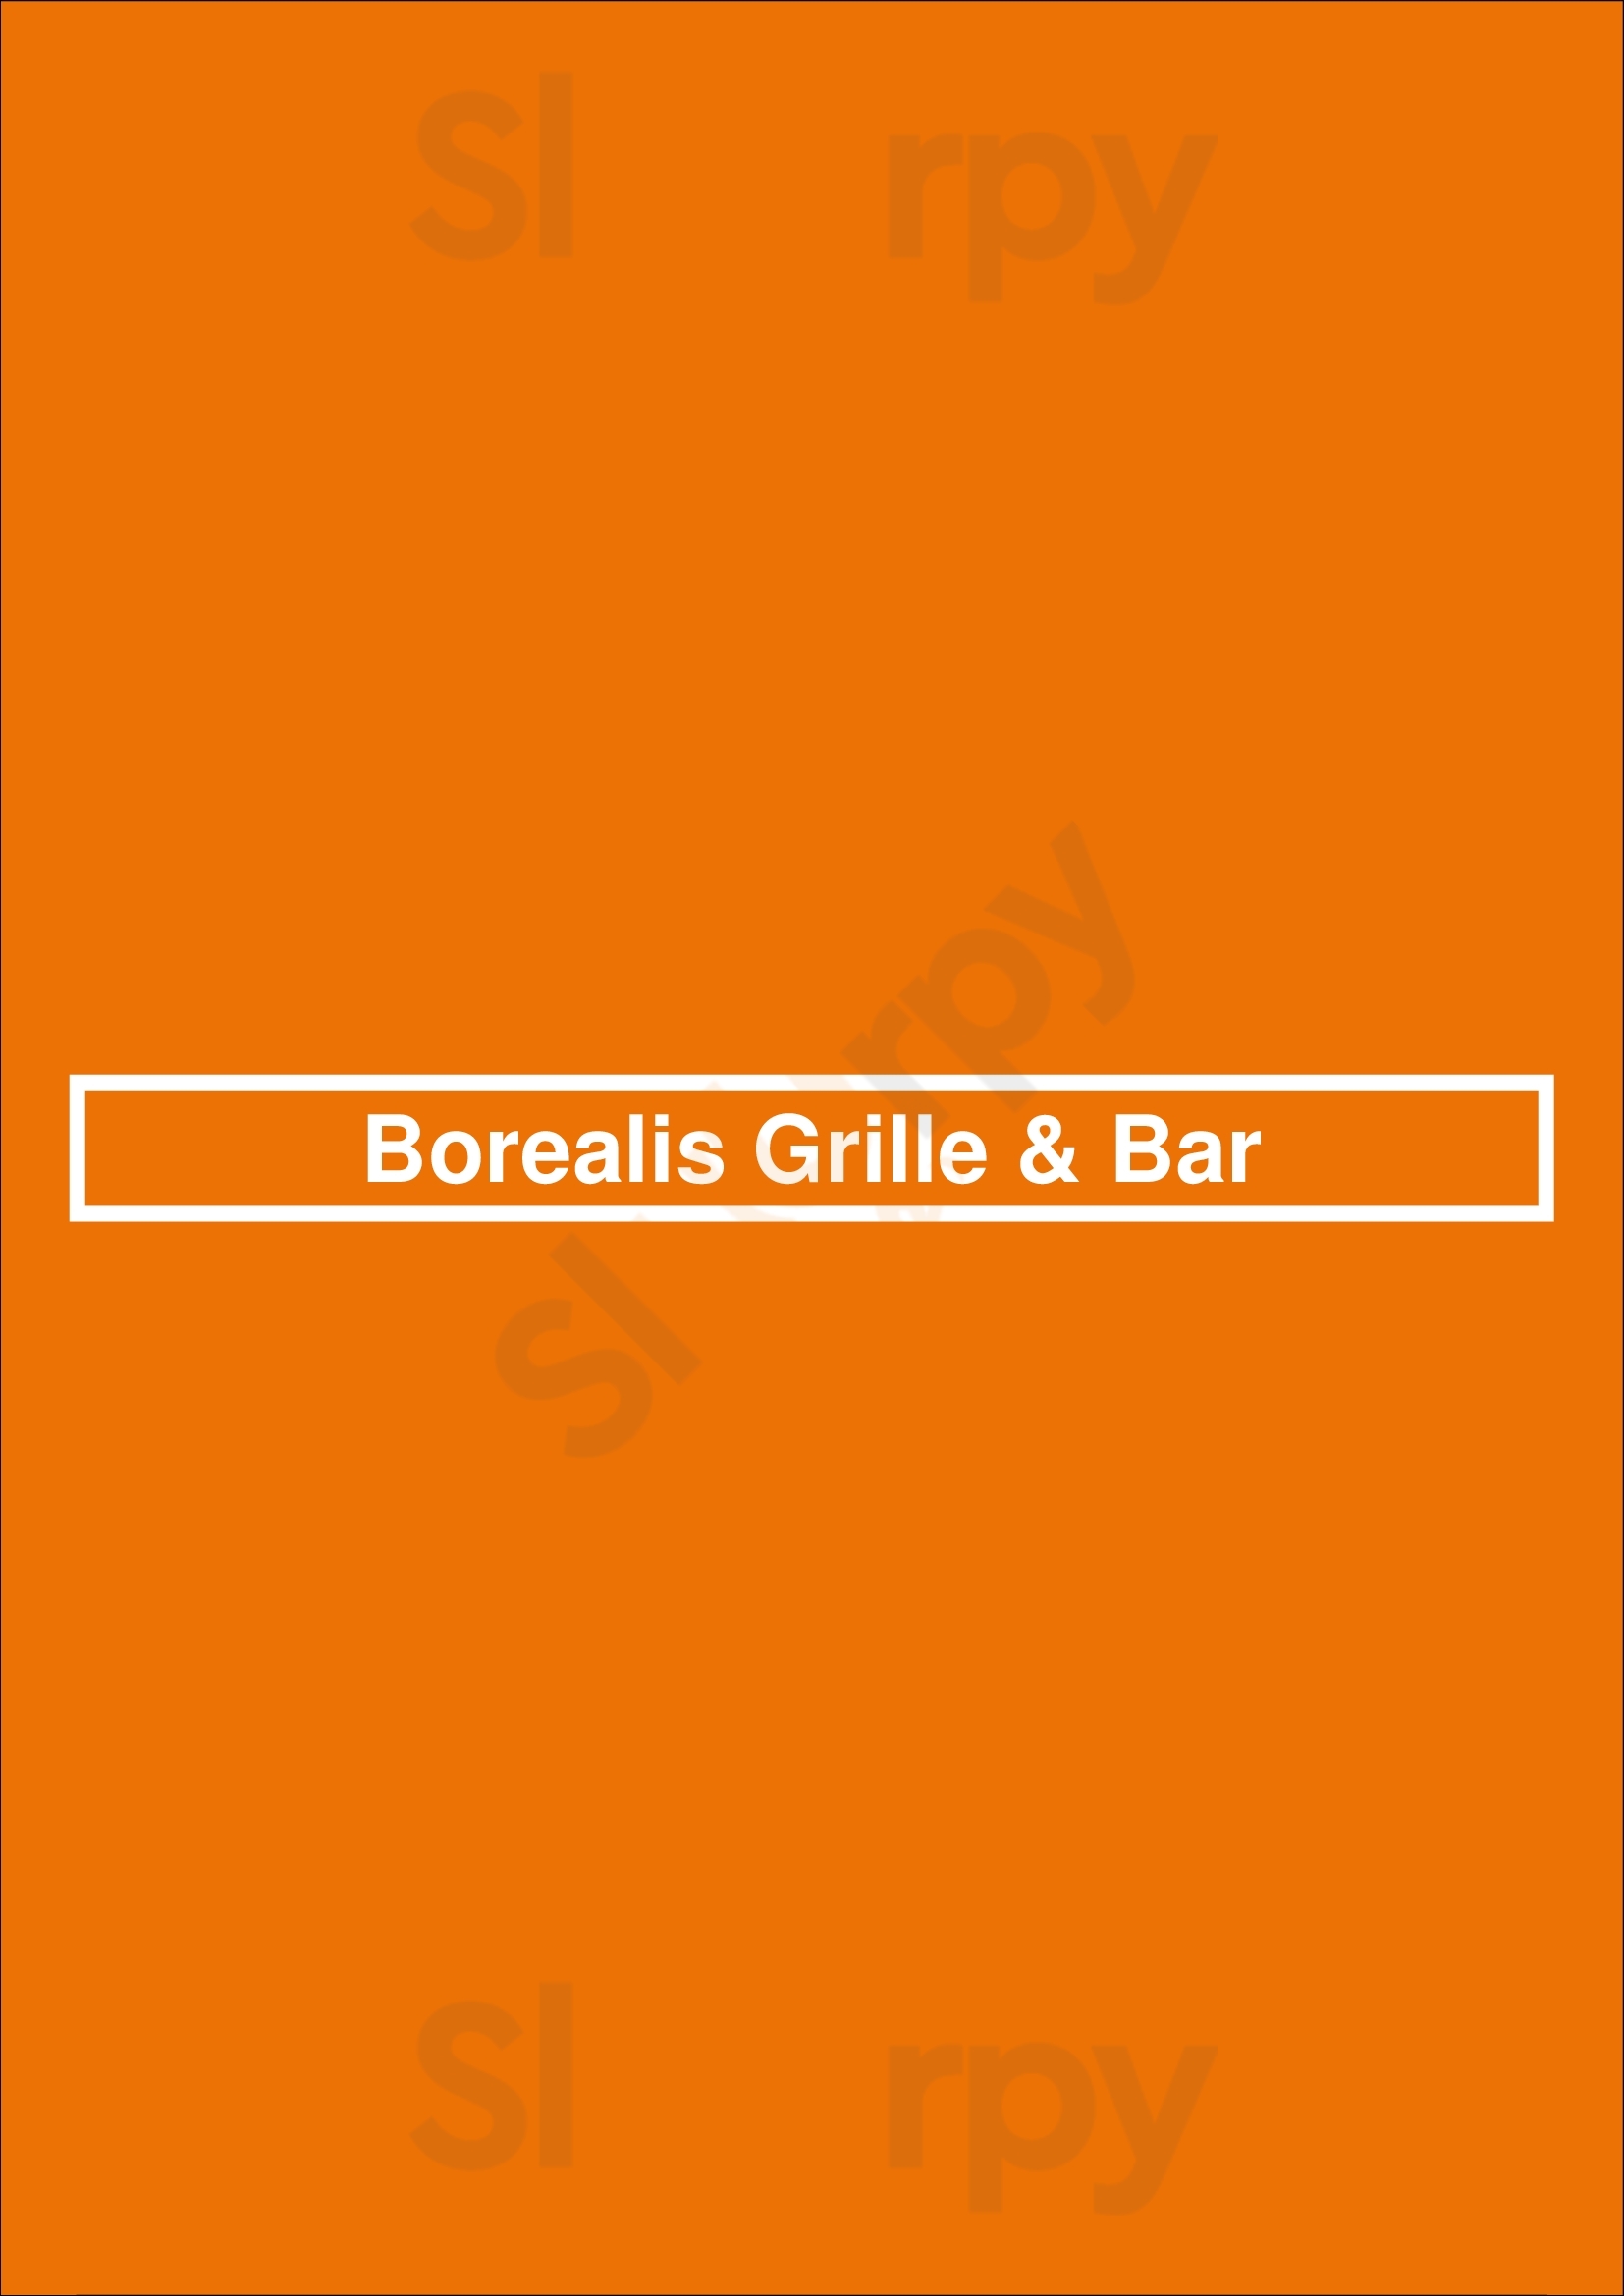 Borealis Grille & Bar Guelph Menu - 1